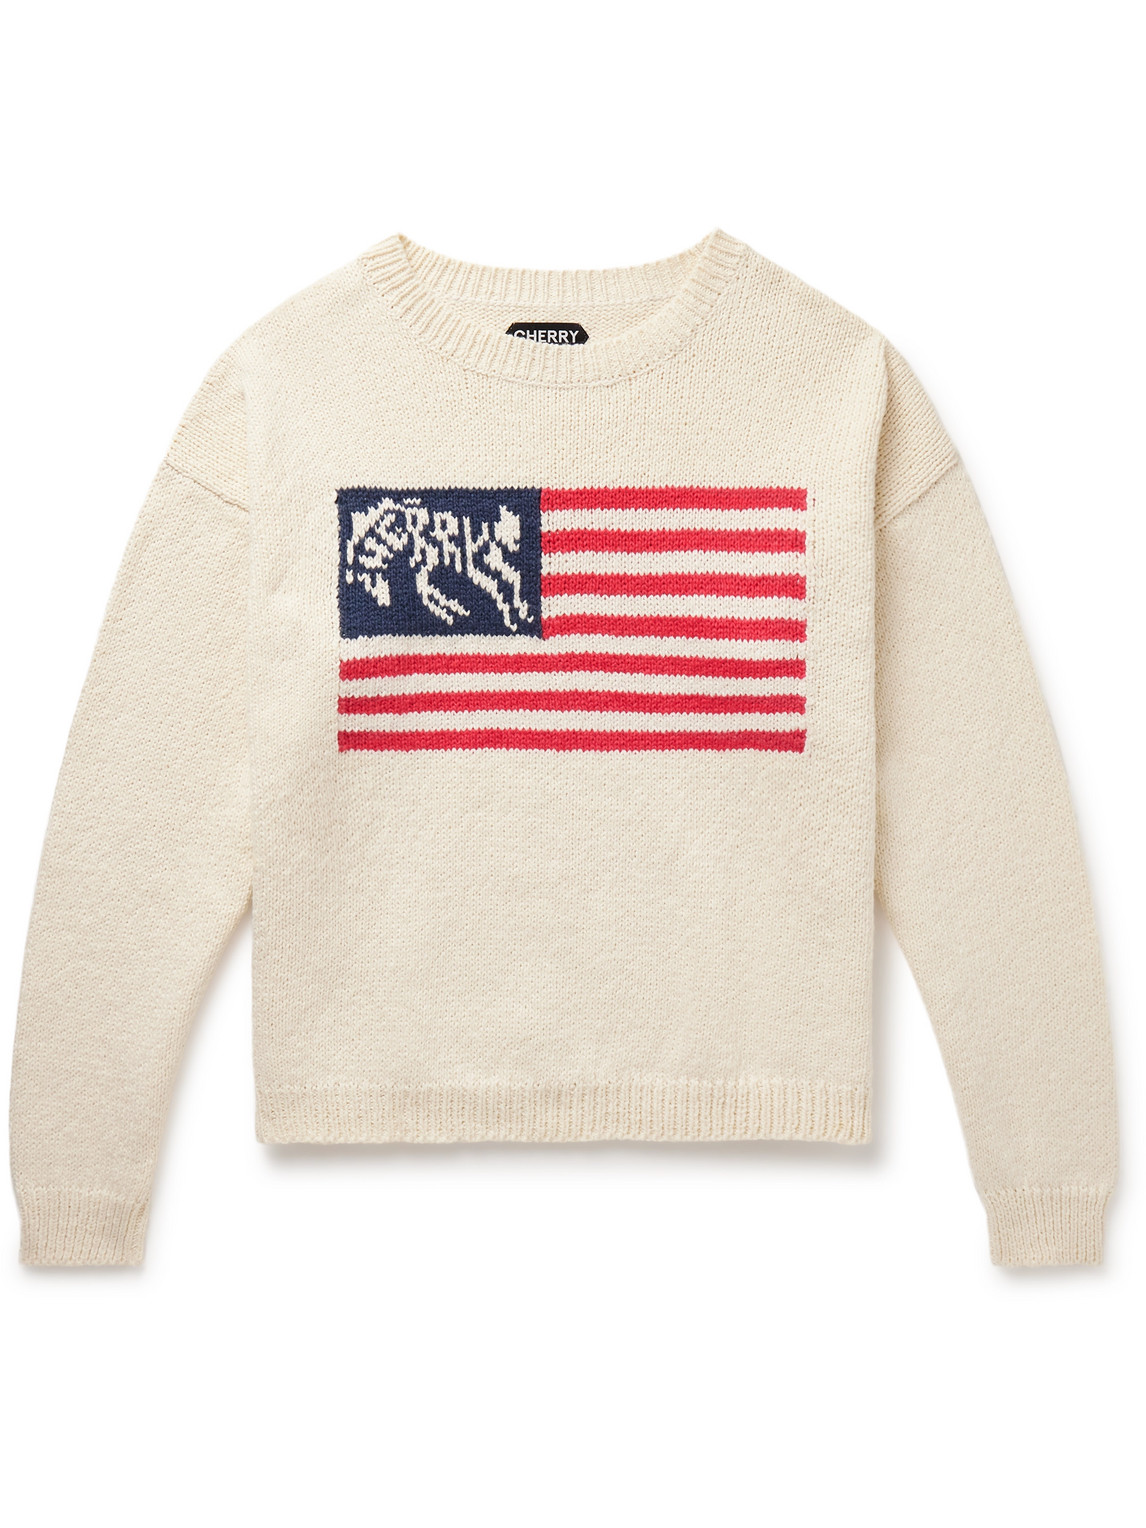 Cherry Los Angeles - Intarsia Cotton Sweater - Men - White - L von Cherry Los Angeles